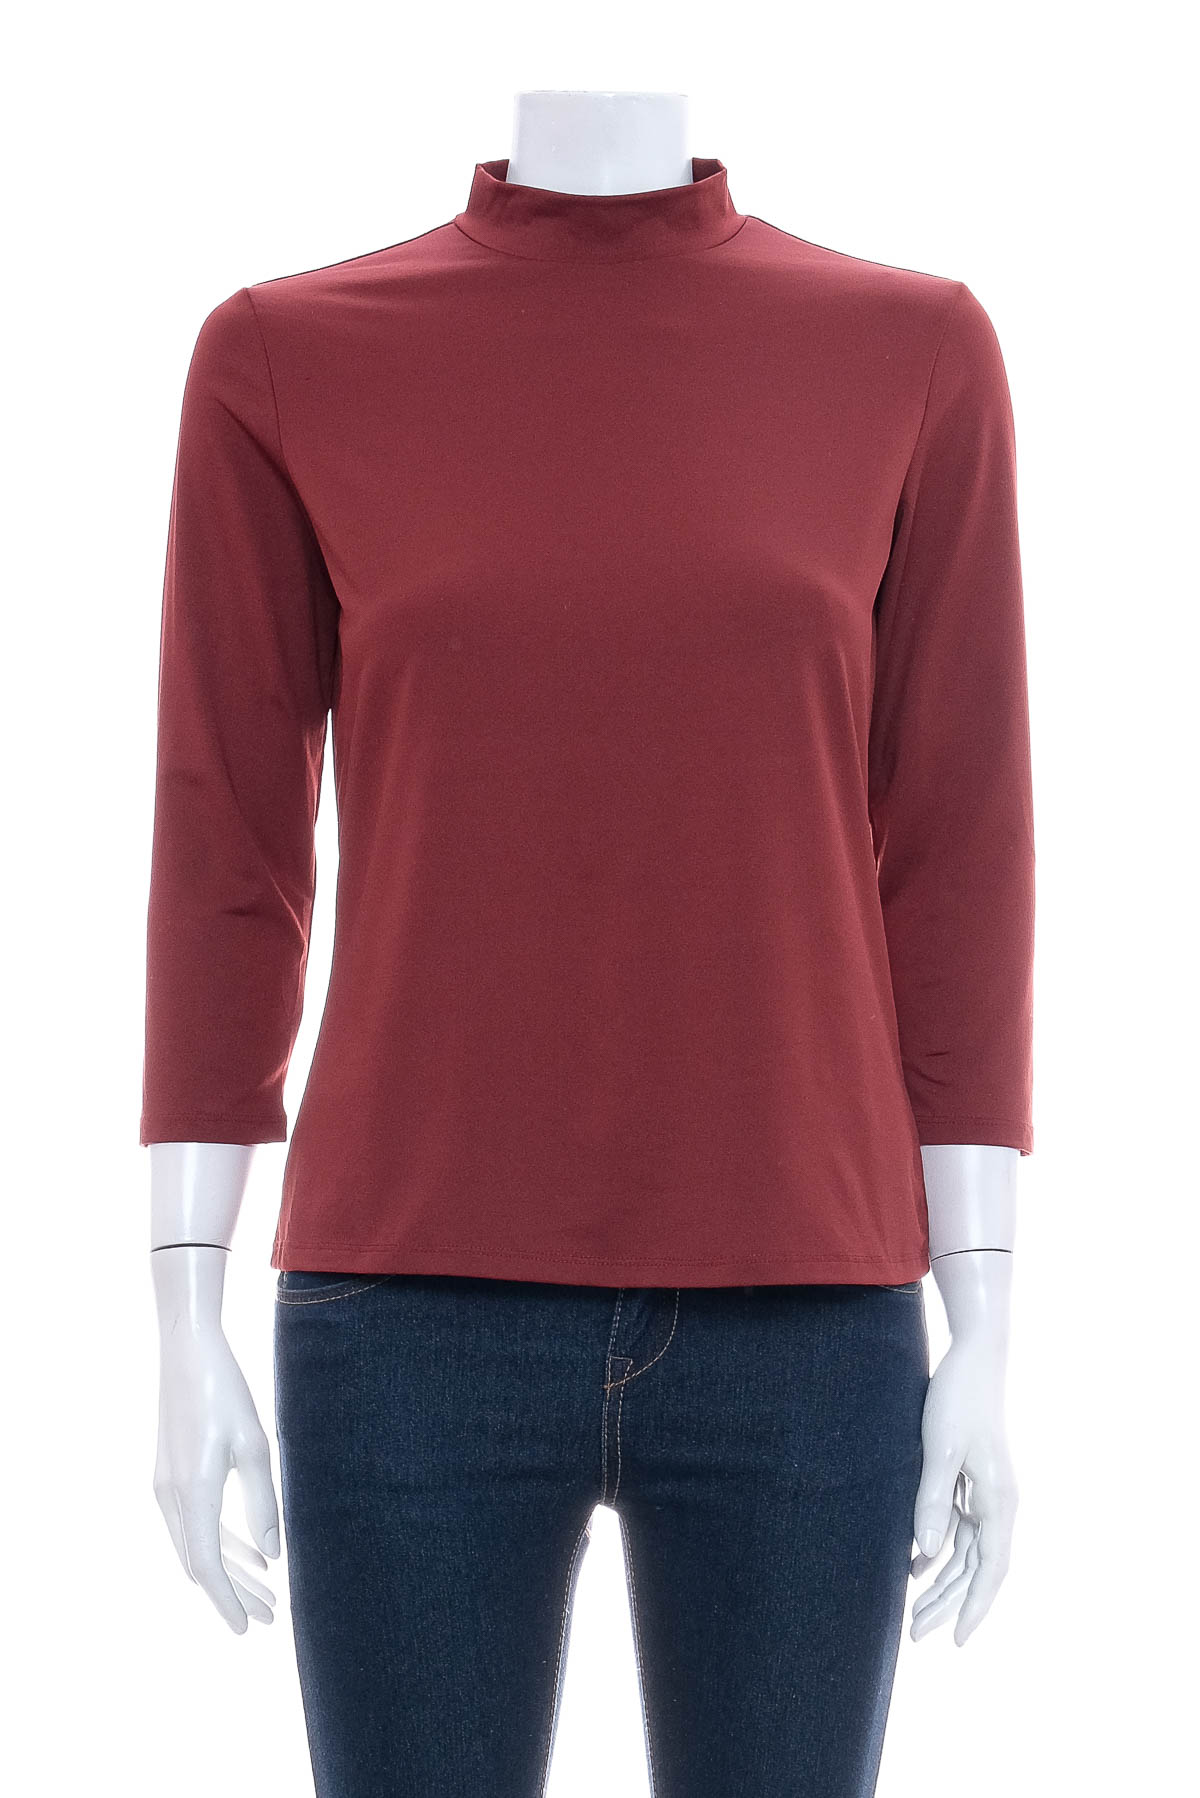 Women's blouse - Zalando essentials - 0